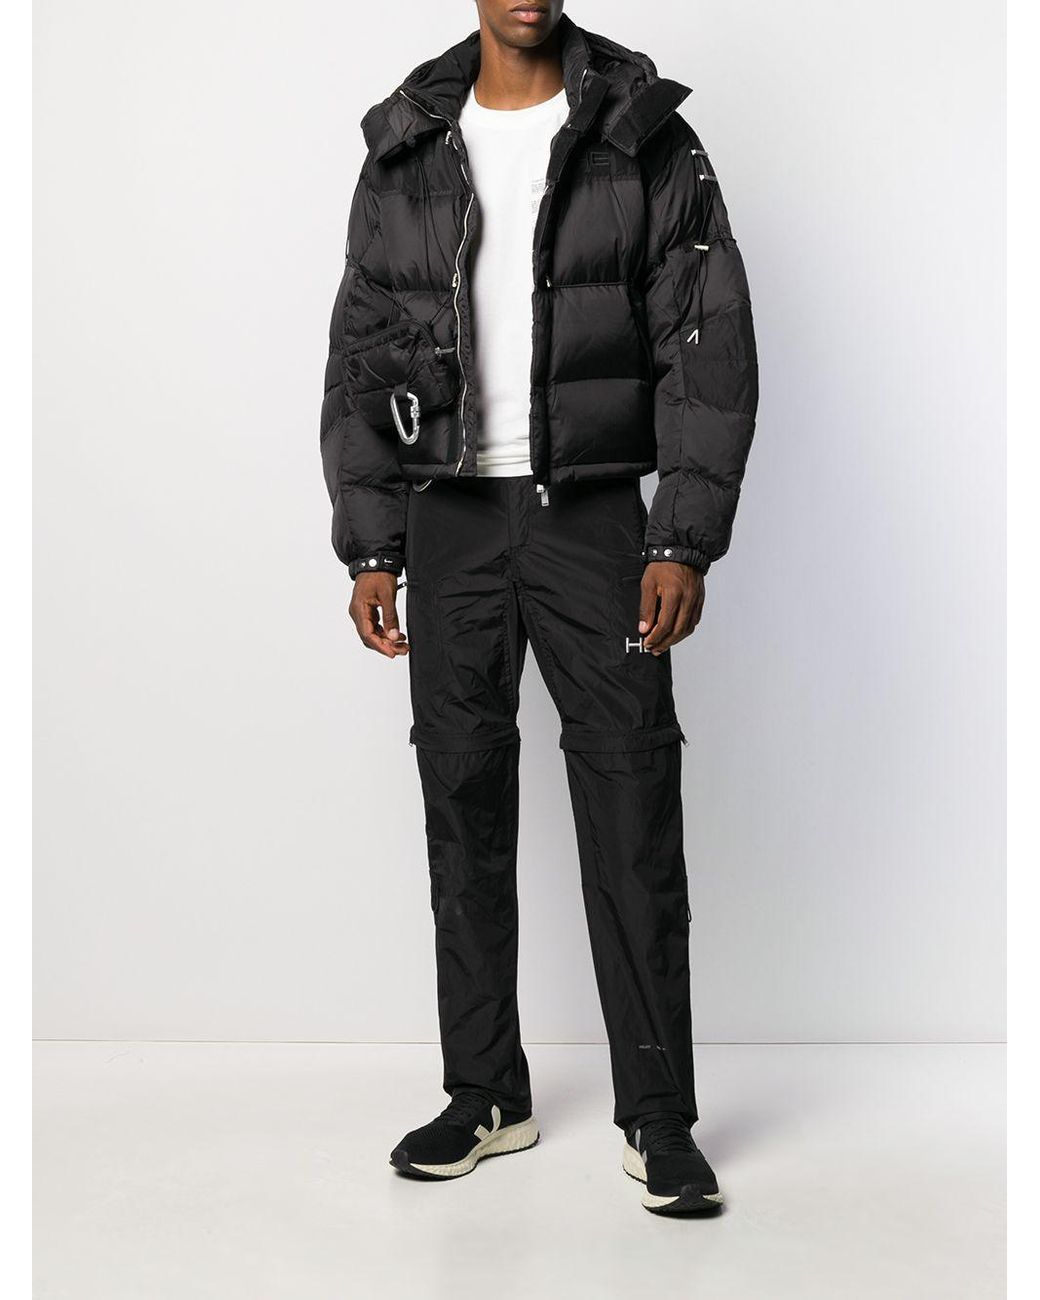 HELIOT EMIL Belt Bag Puffer Jacket in Black for Men | Lyst Canada